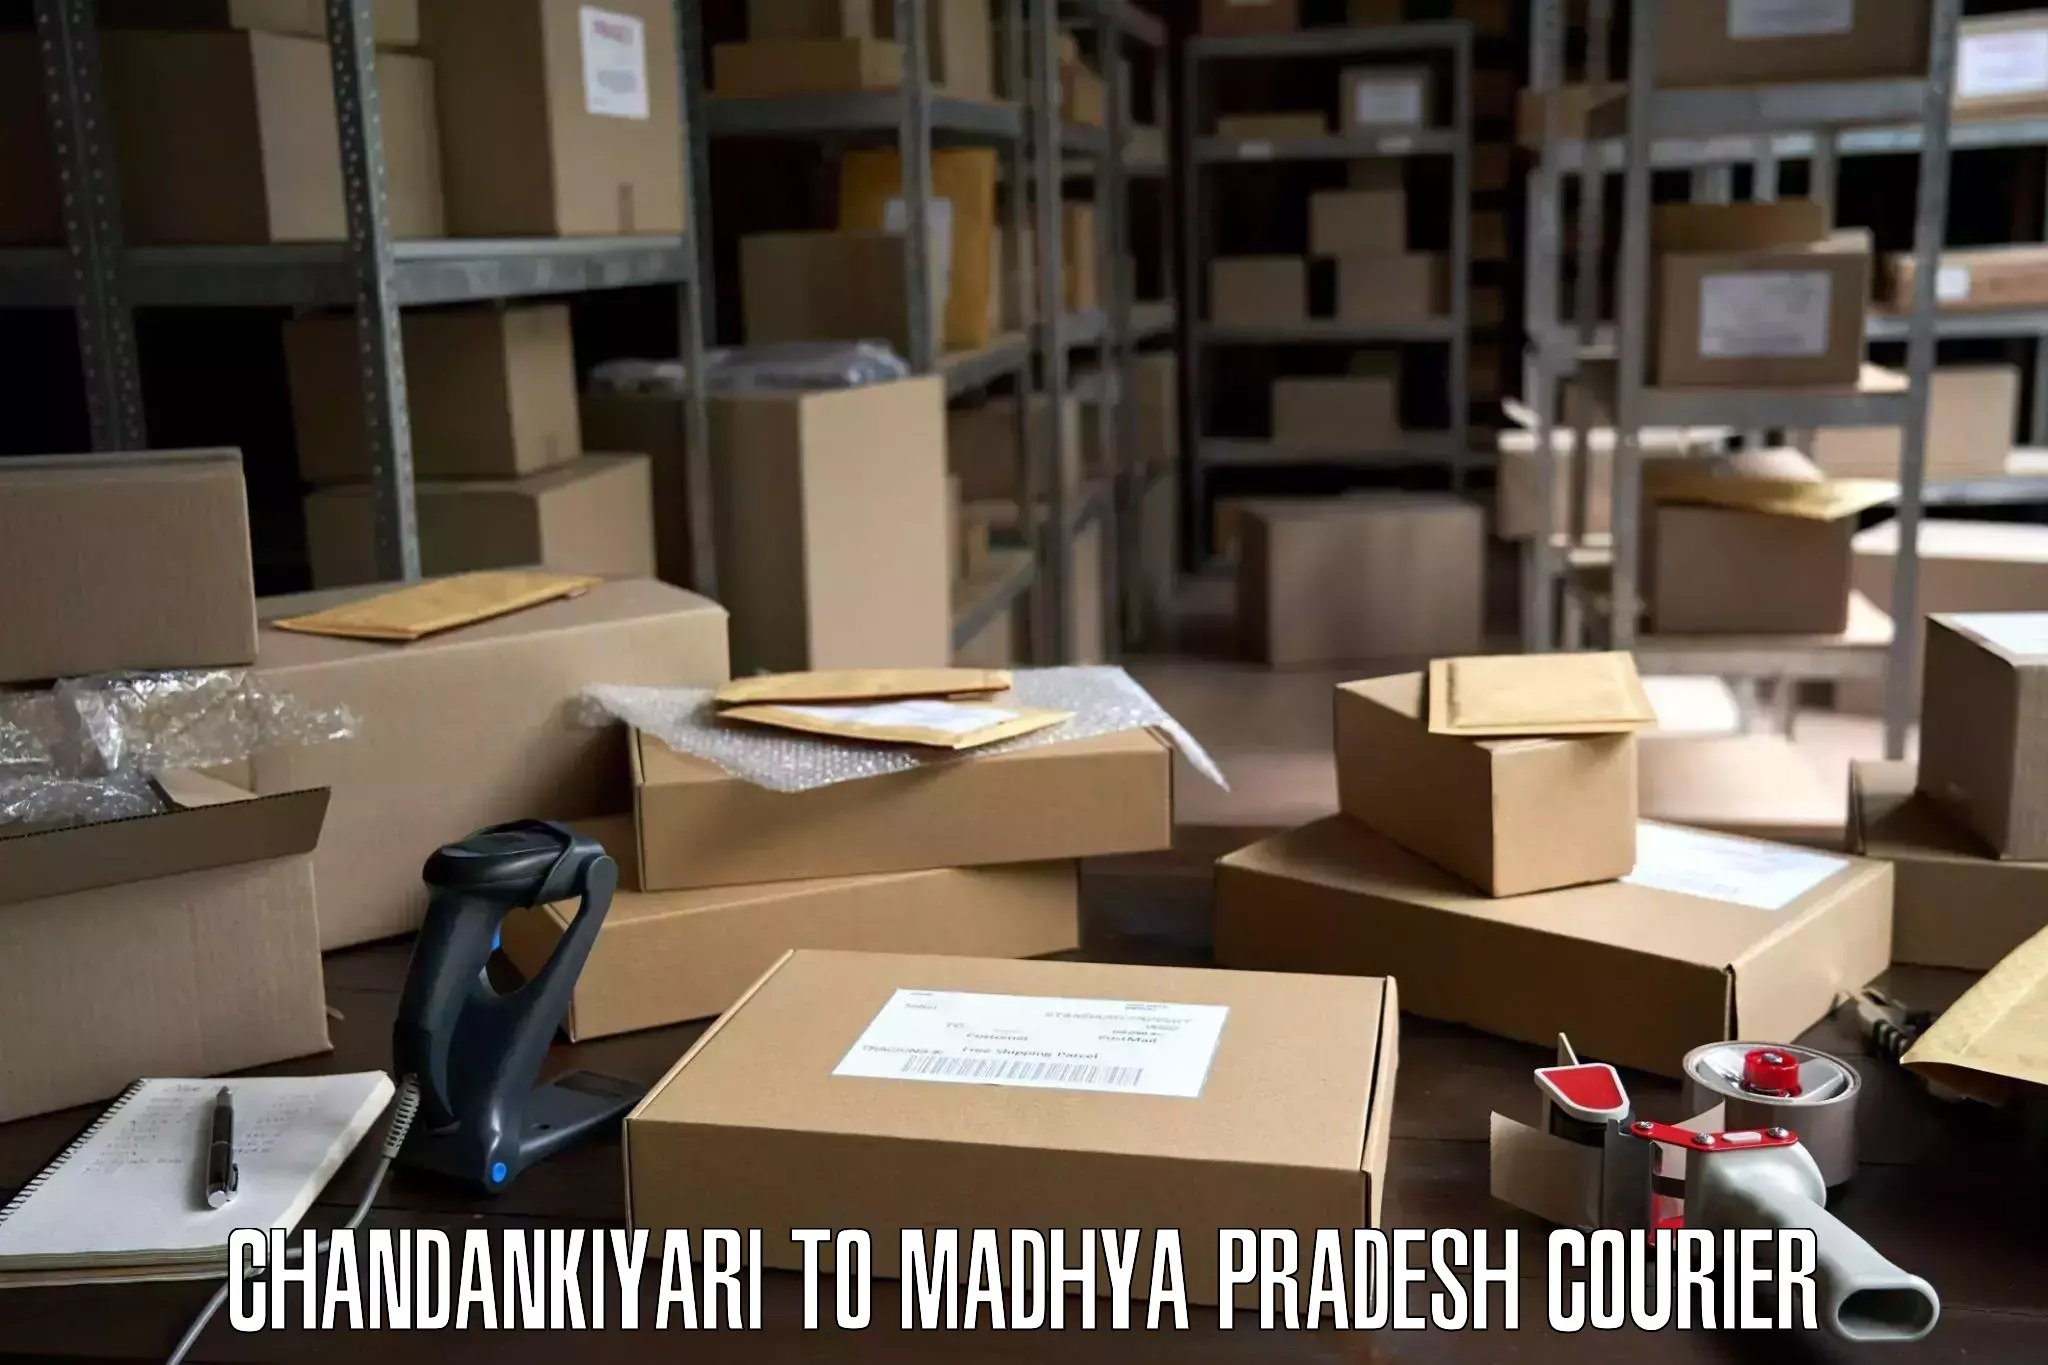 Professional moving company Chandankiyari to Sidhi